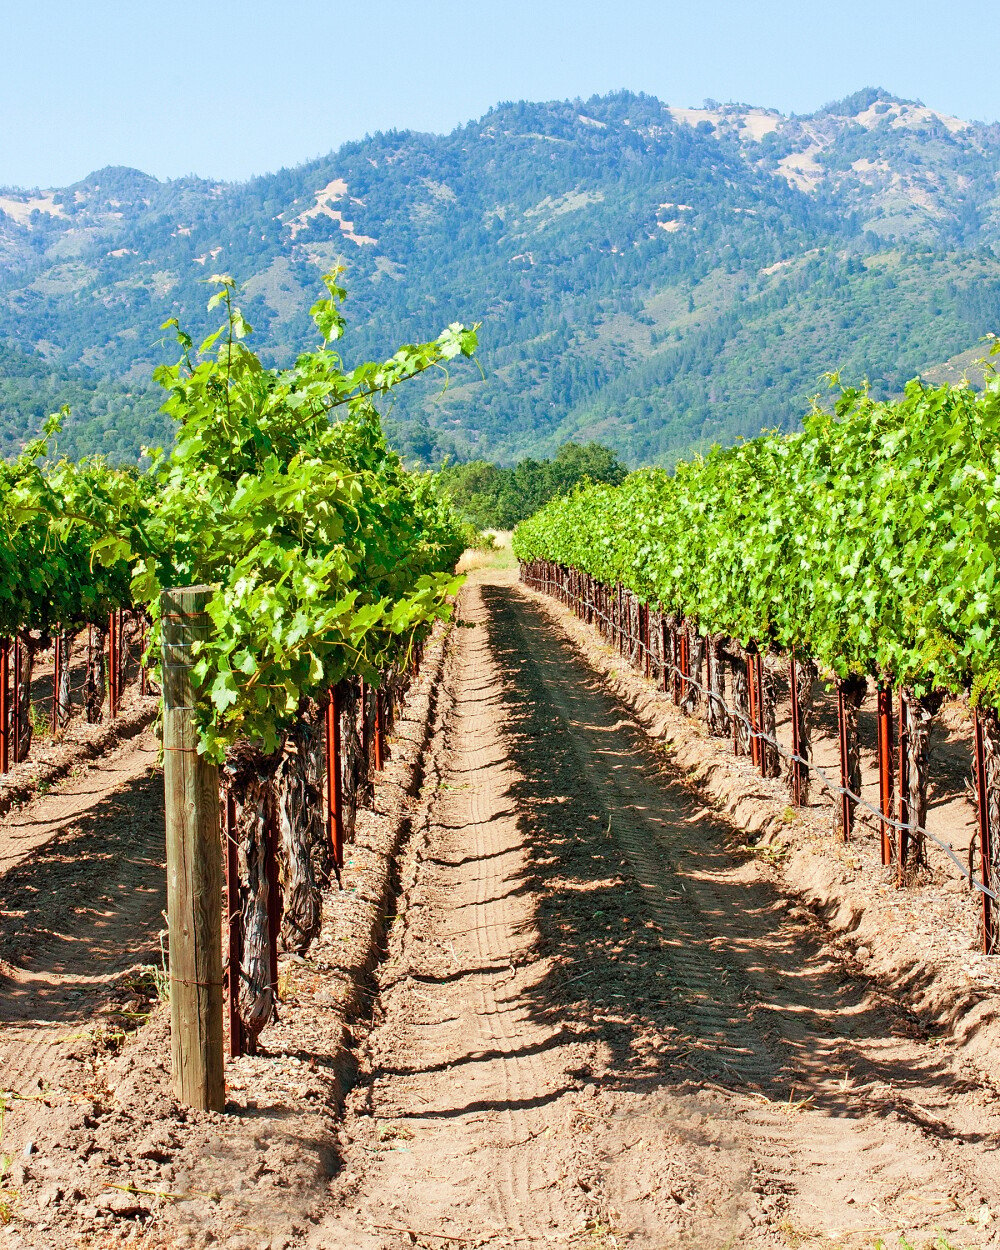 Napa Valley: The history of a prestigious wine region